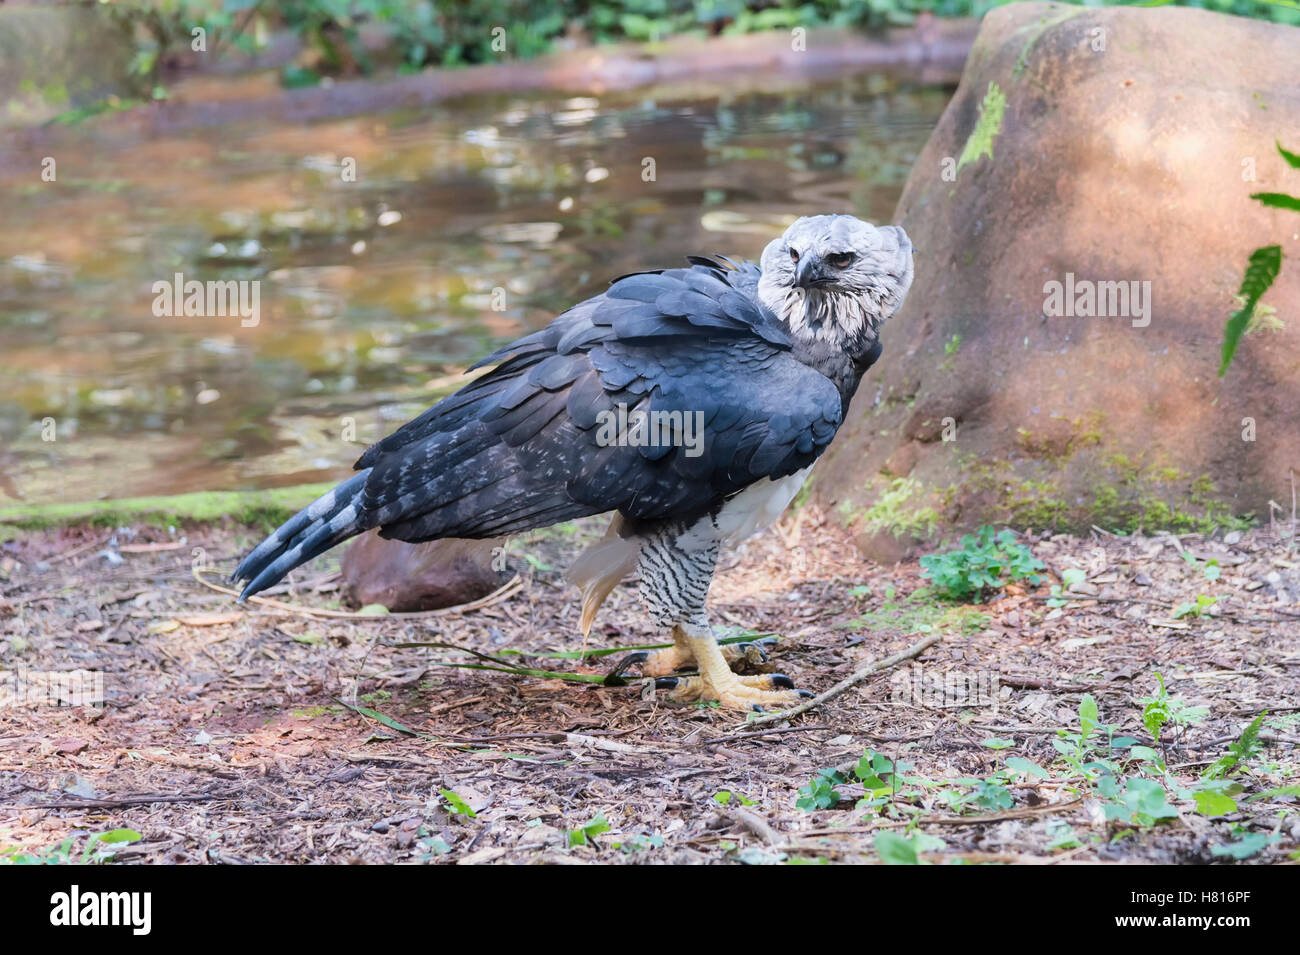 Harpy Eagle (Harpia harpyia) on the ground, Brazil Stock Photo